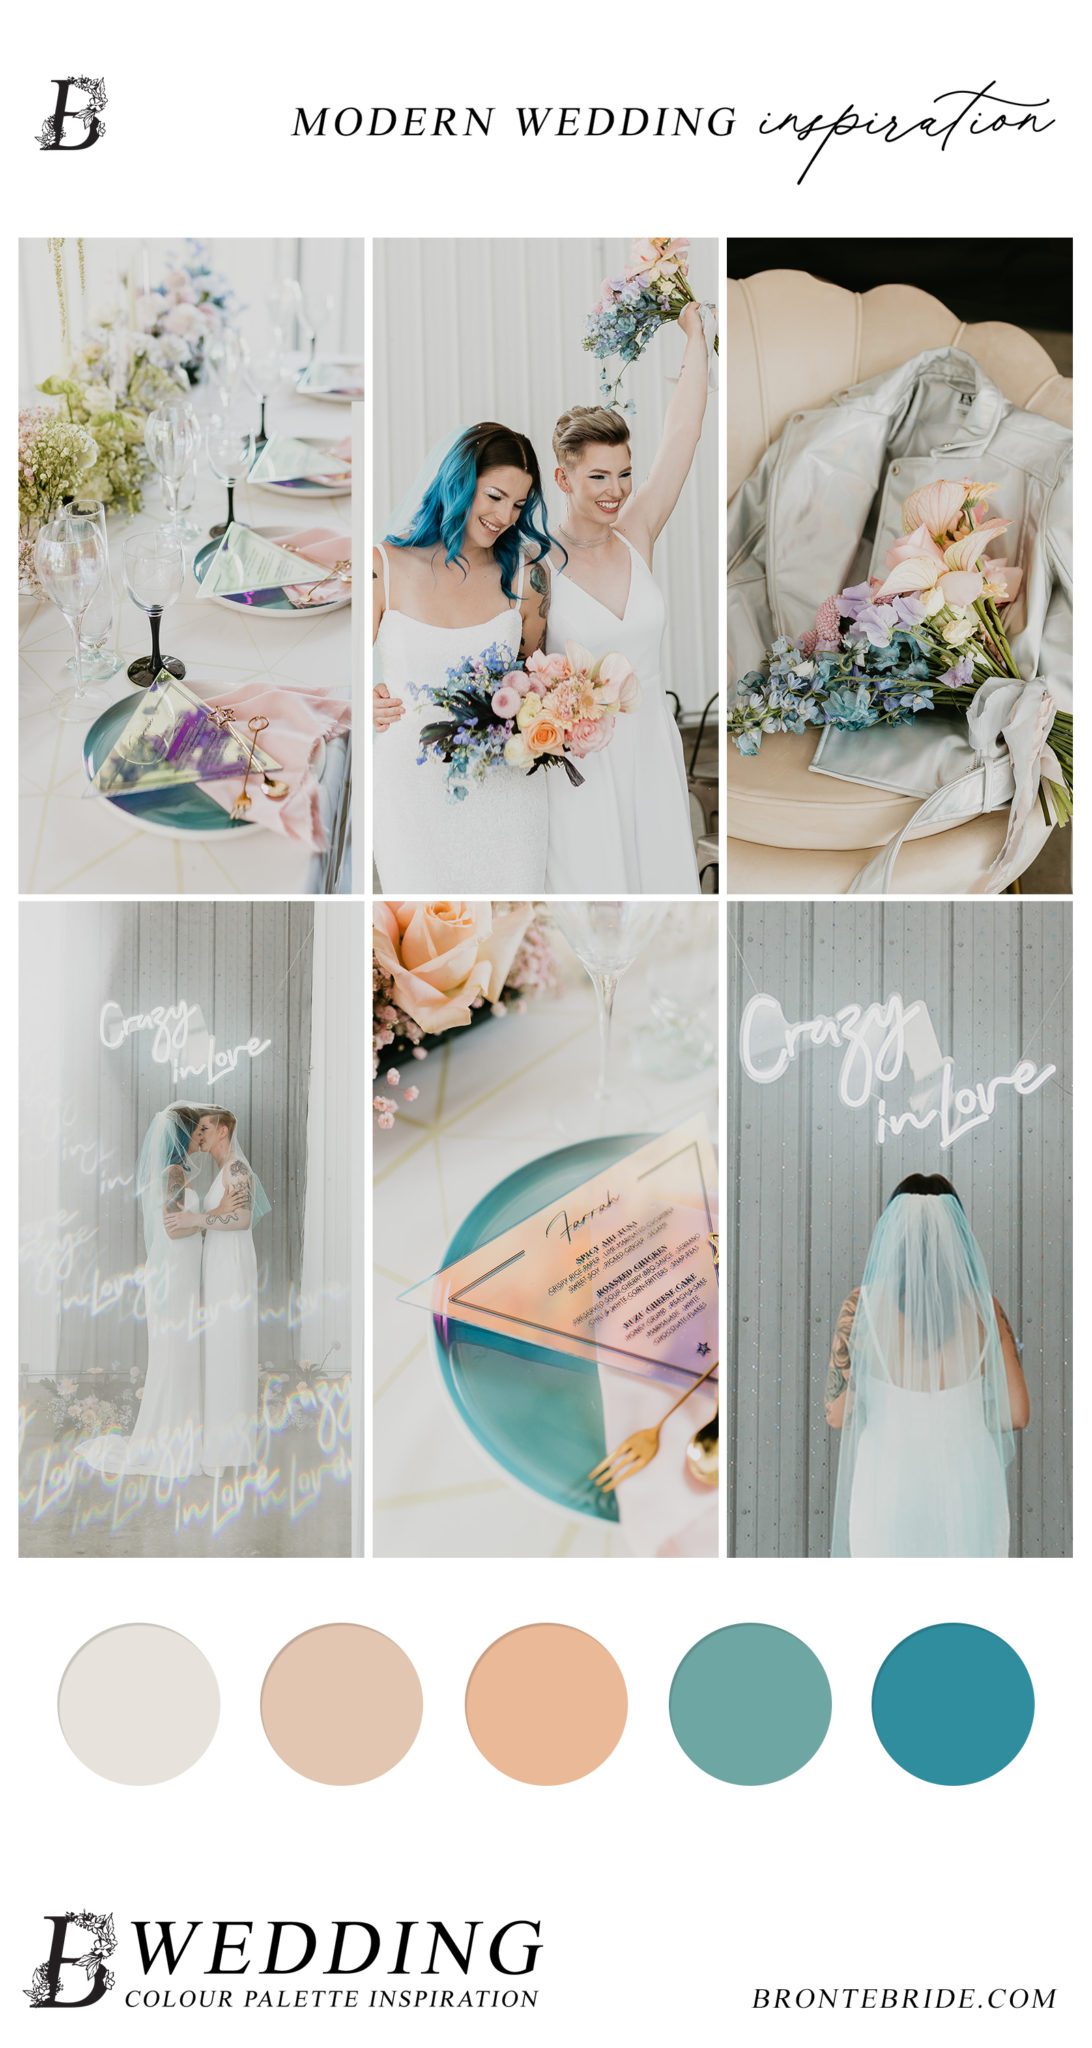 Modern Wedding Colour Palette Inspiration - Holographic Edgy Wedding Inspiration